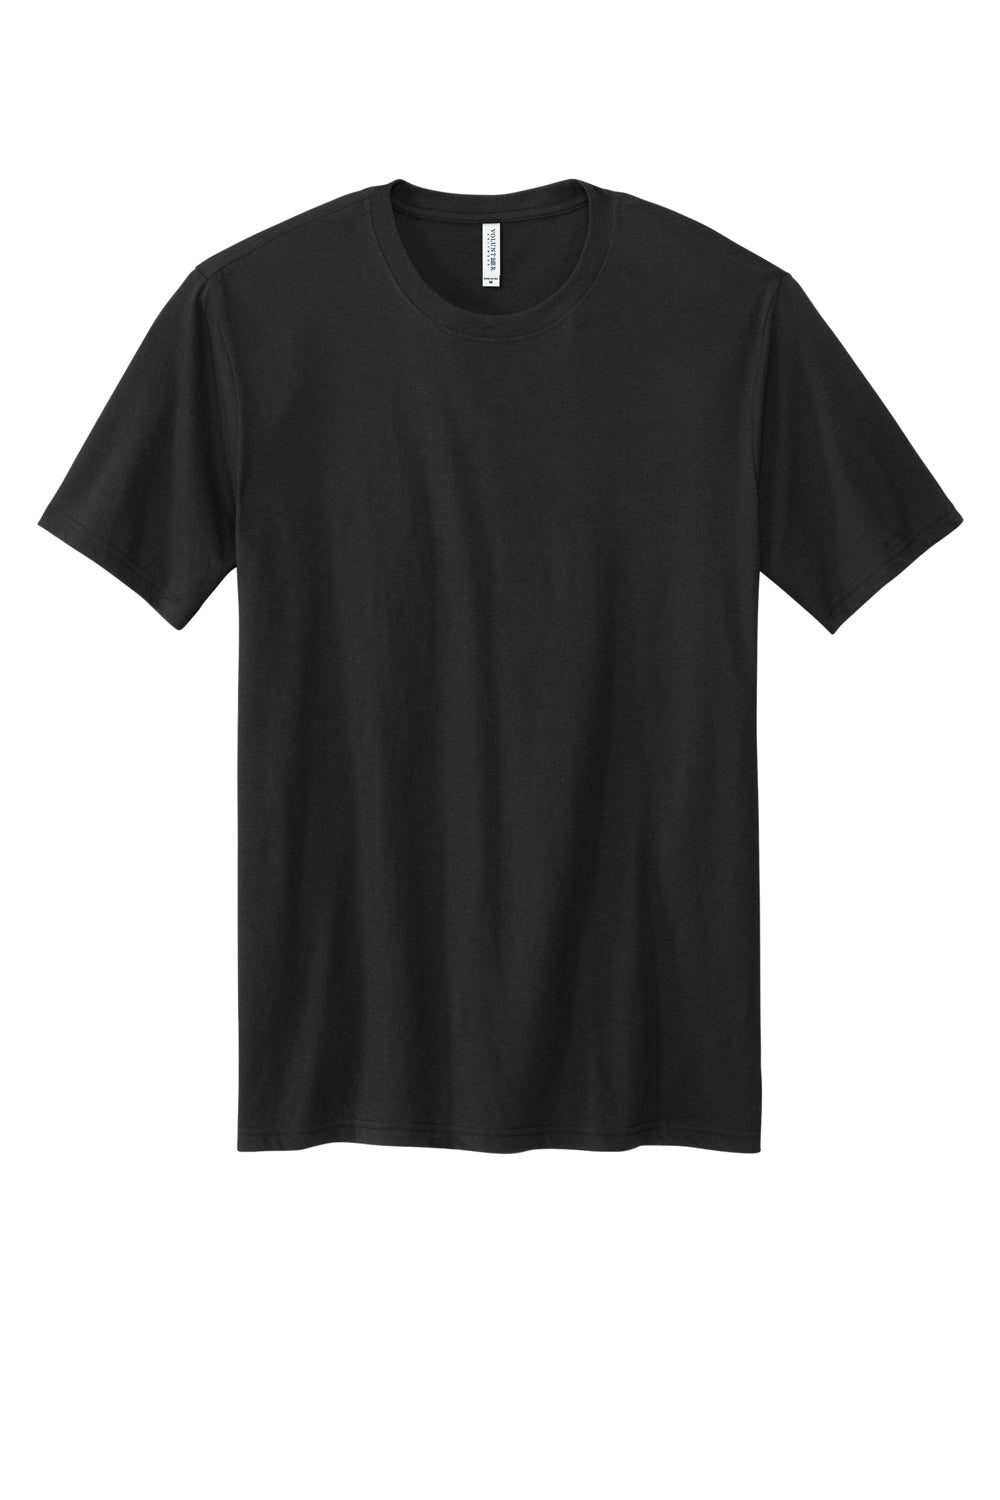 Volunteer Knitwear VL40 Short Sleeve Crewneck T-Shirt Black Flat Front